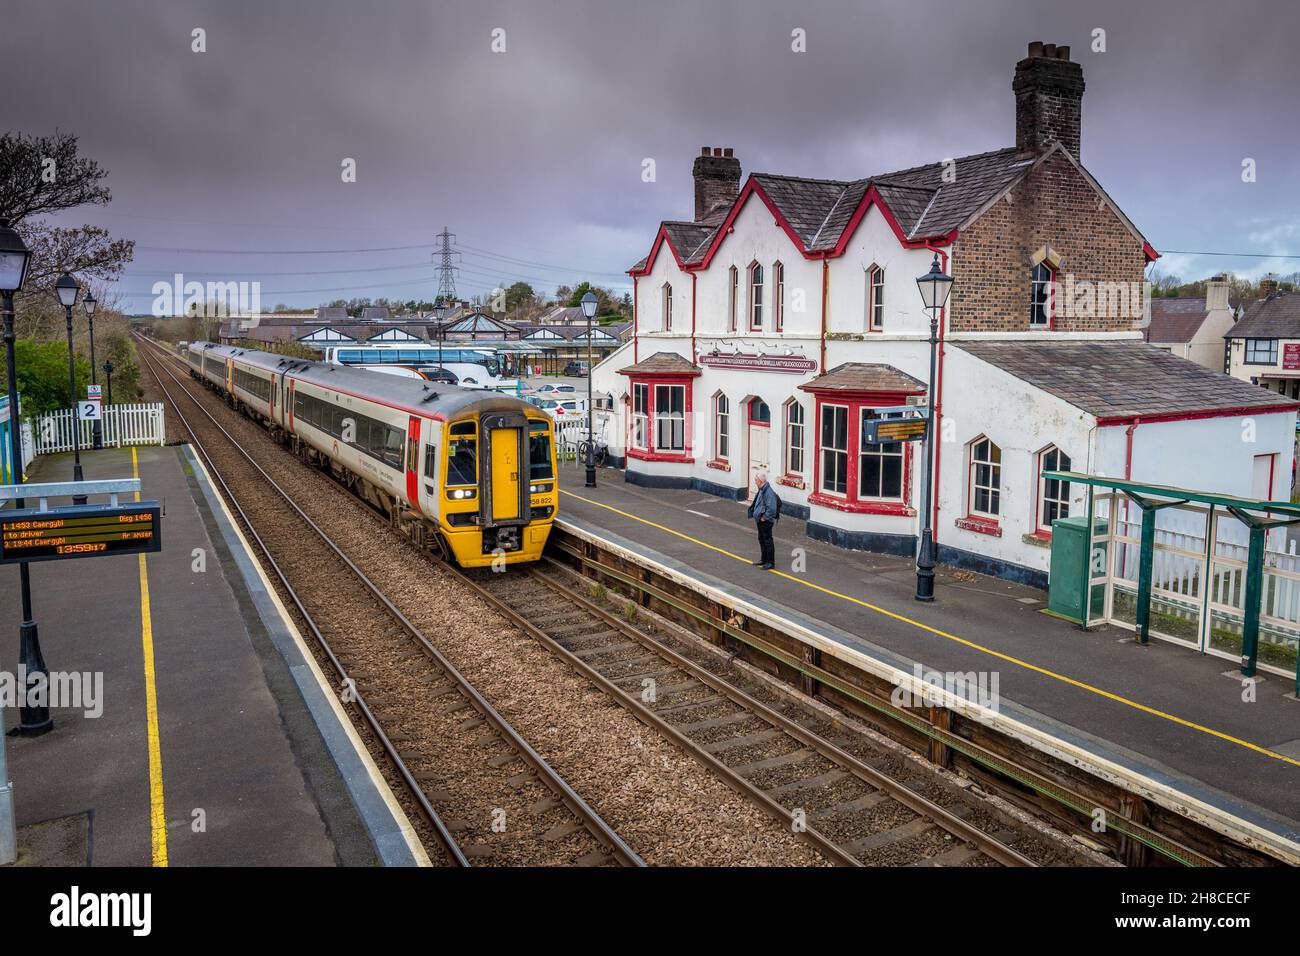 Llanfairpwll stazione ferroviaria. La stazione ferroviaria gallese con il nome più lungo, Llanfairpwlgwyngylgogerychwyrndrobwllllantysiliogogoch. Foto Stock